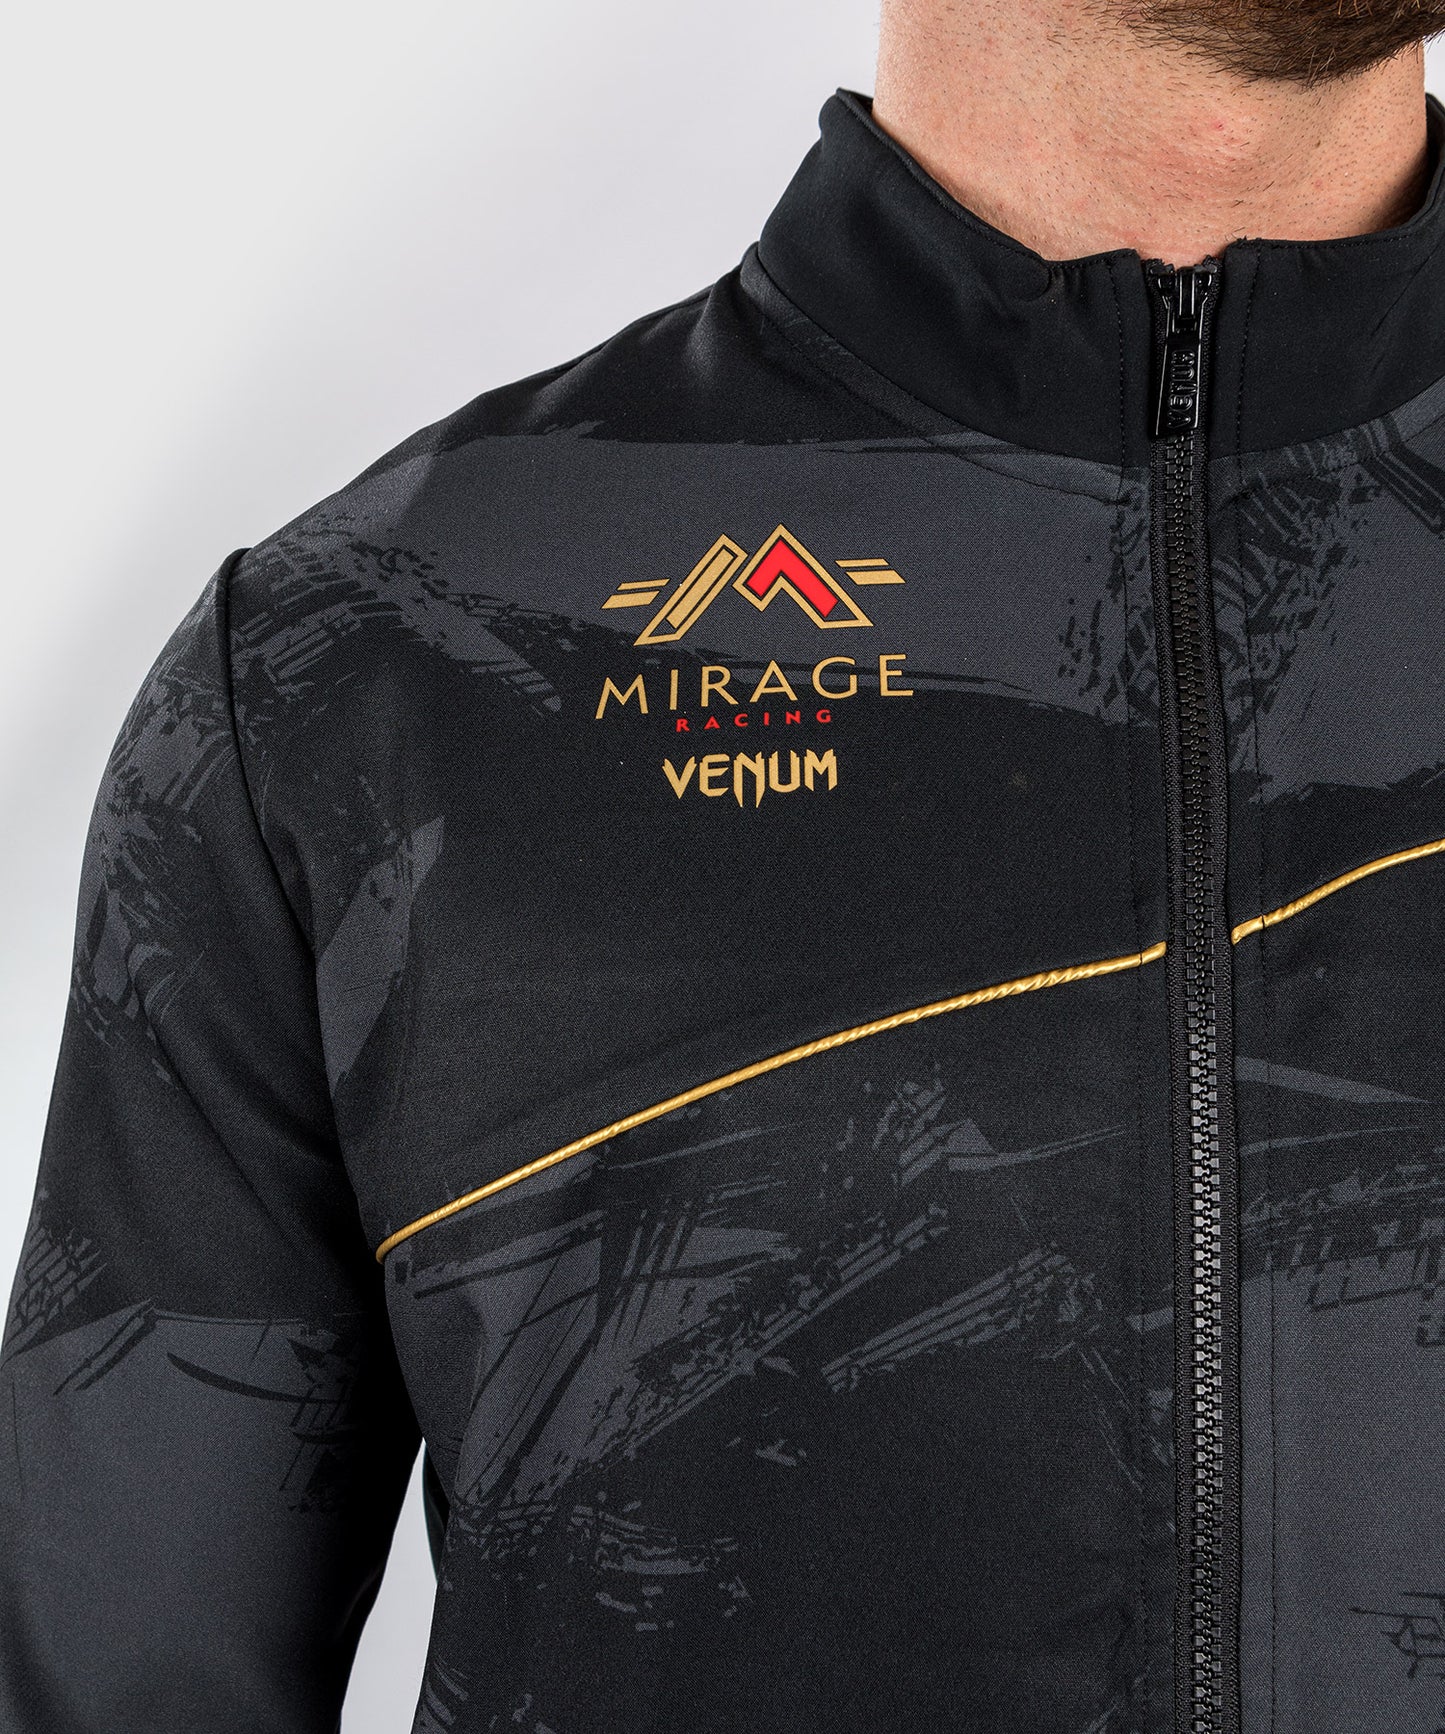 Venum x Mirage Track Jacket - Black/Gold